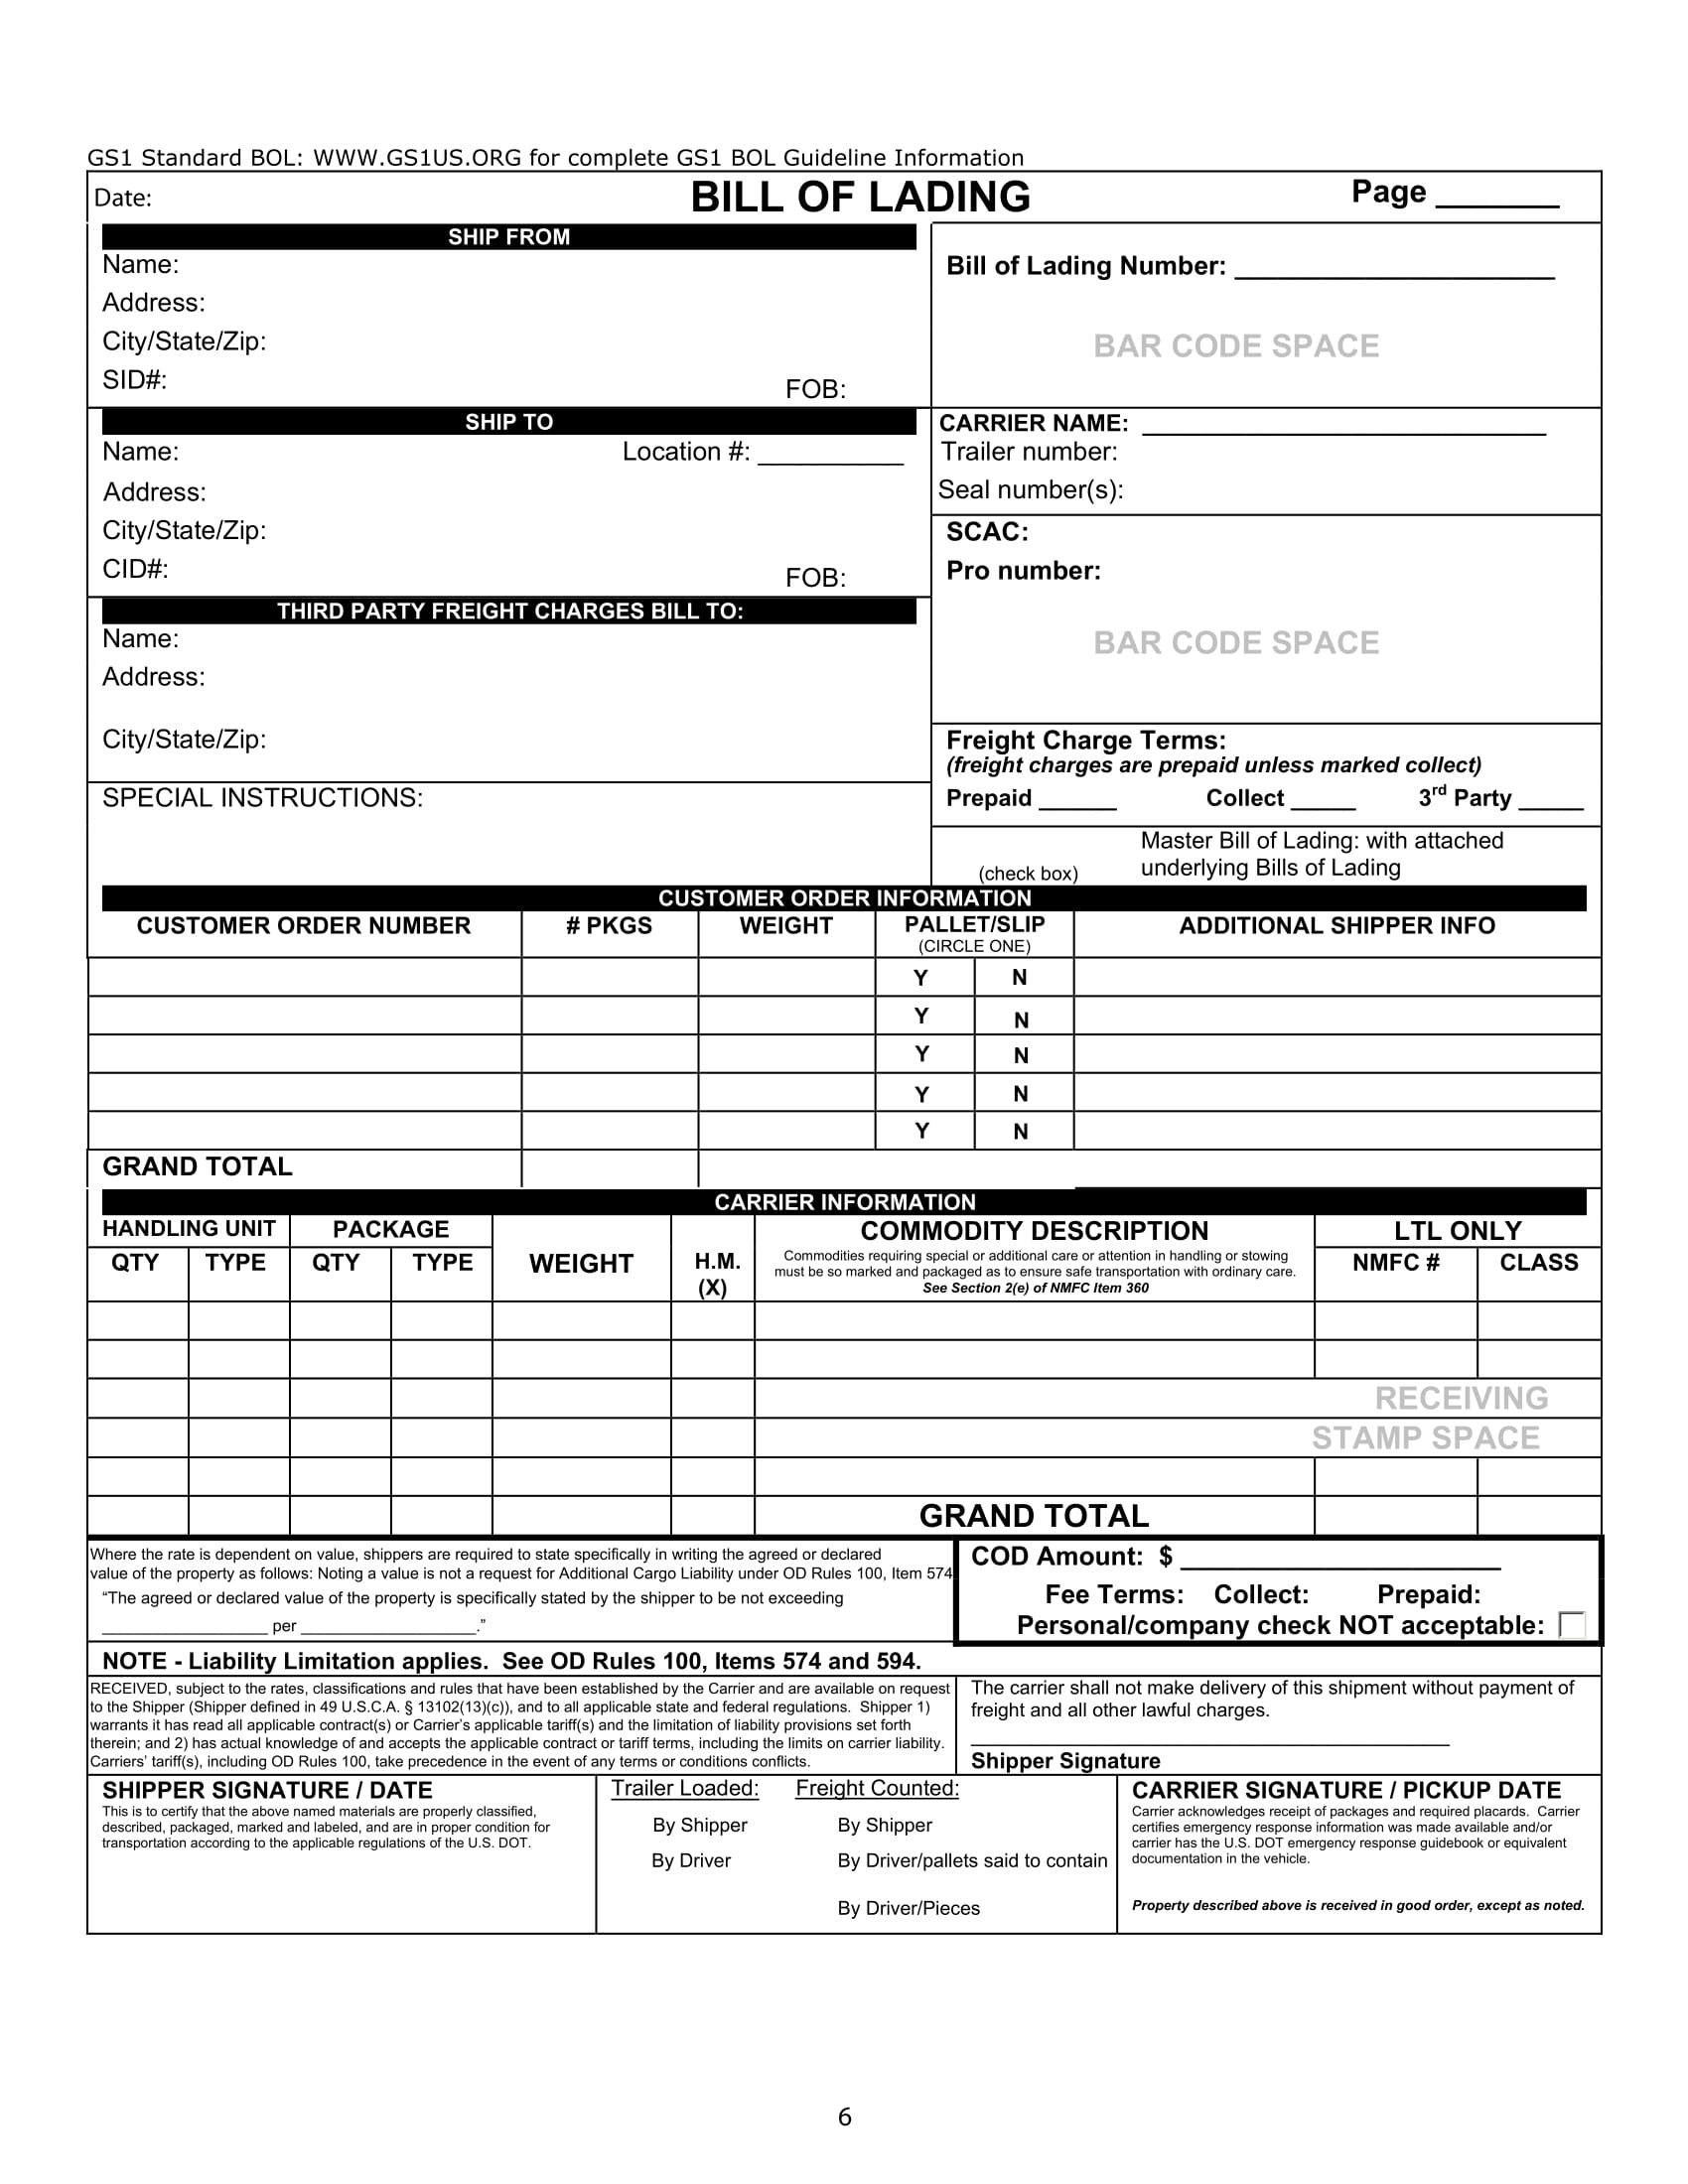 bill of lading form format example 1